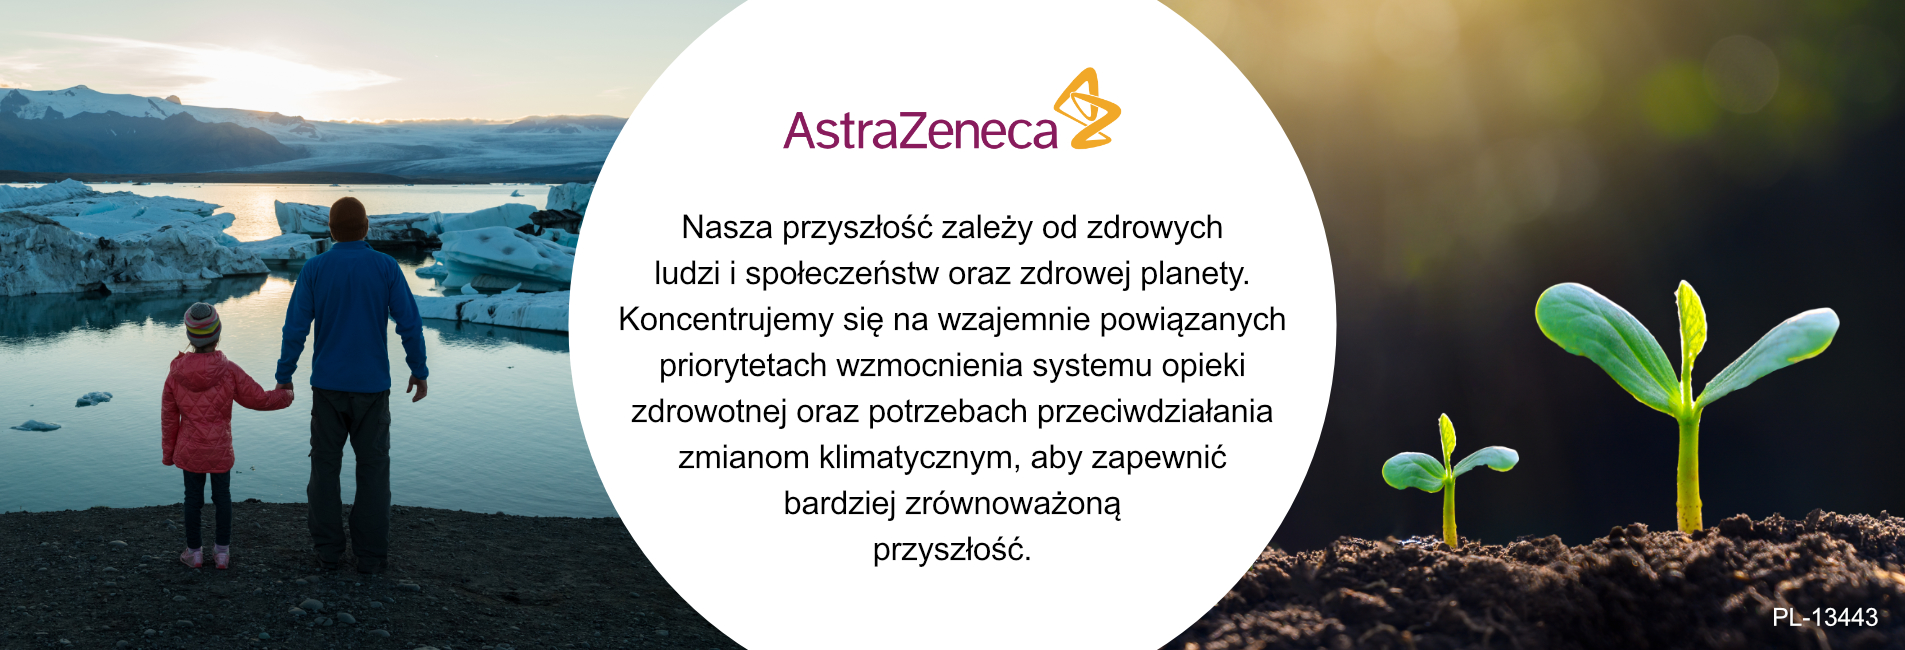 AstaZeneca Pharma Poland na konferencji